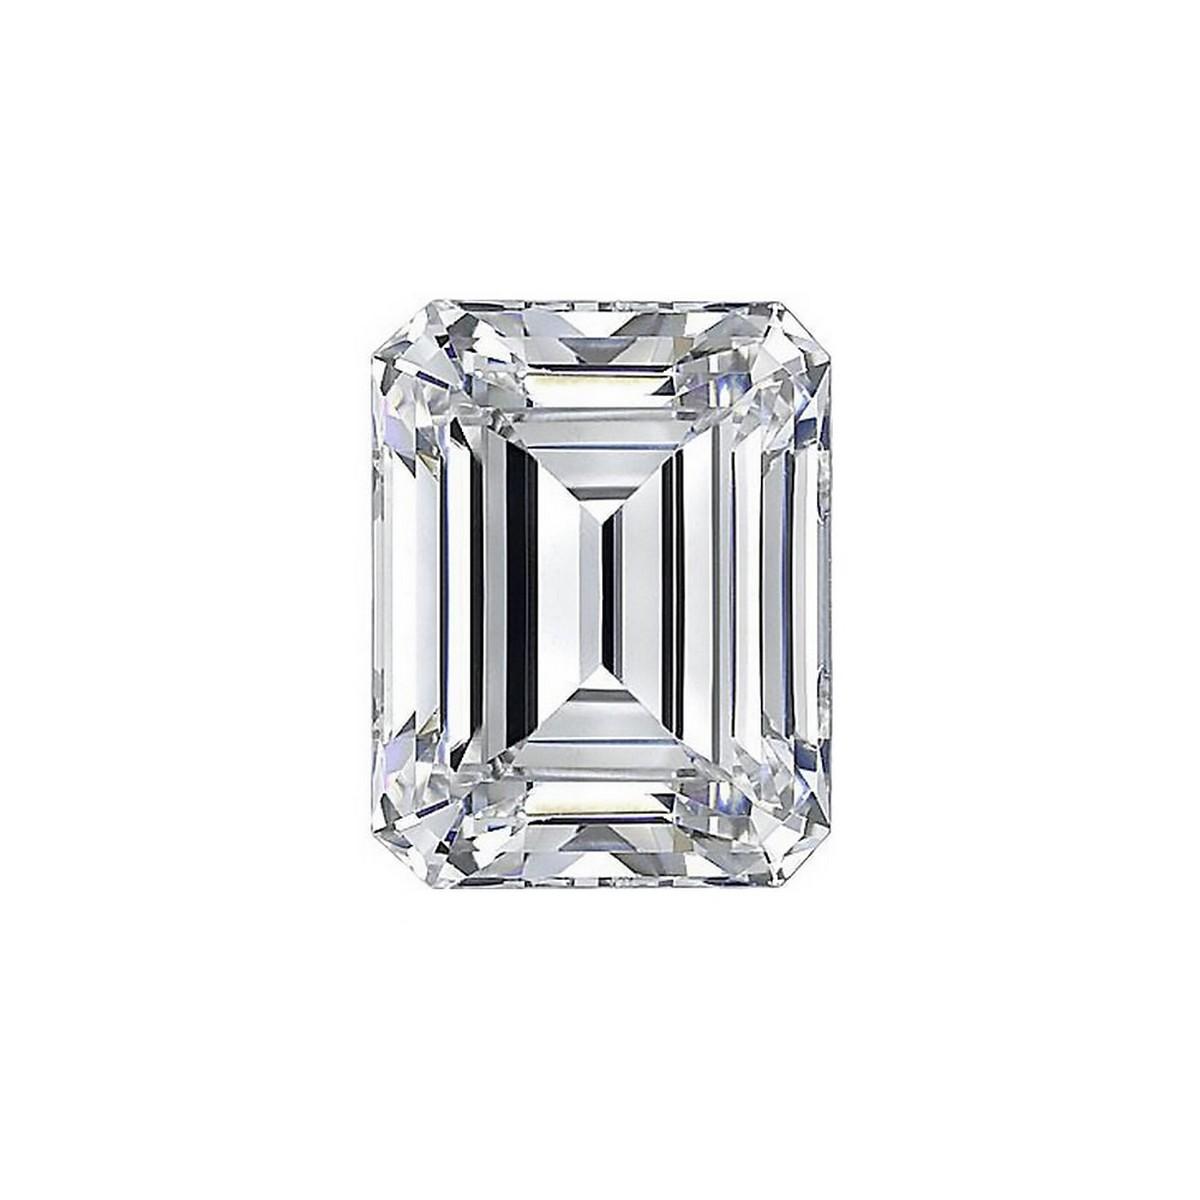 5.11 ctw. VVS2 IGI Certified Emerald Cut Loose Diamond (LAB GROWN)